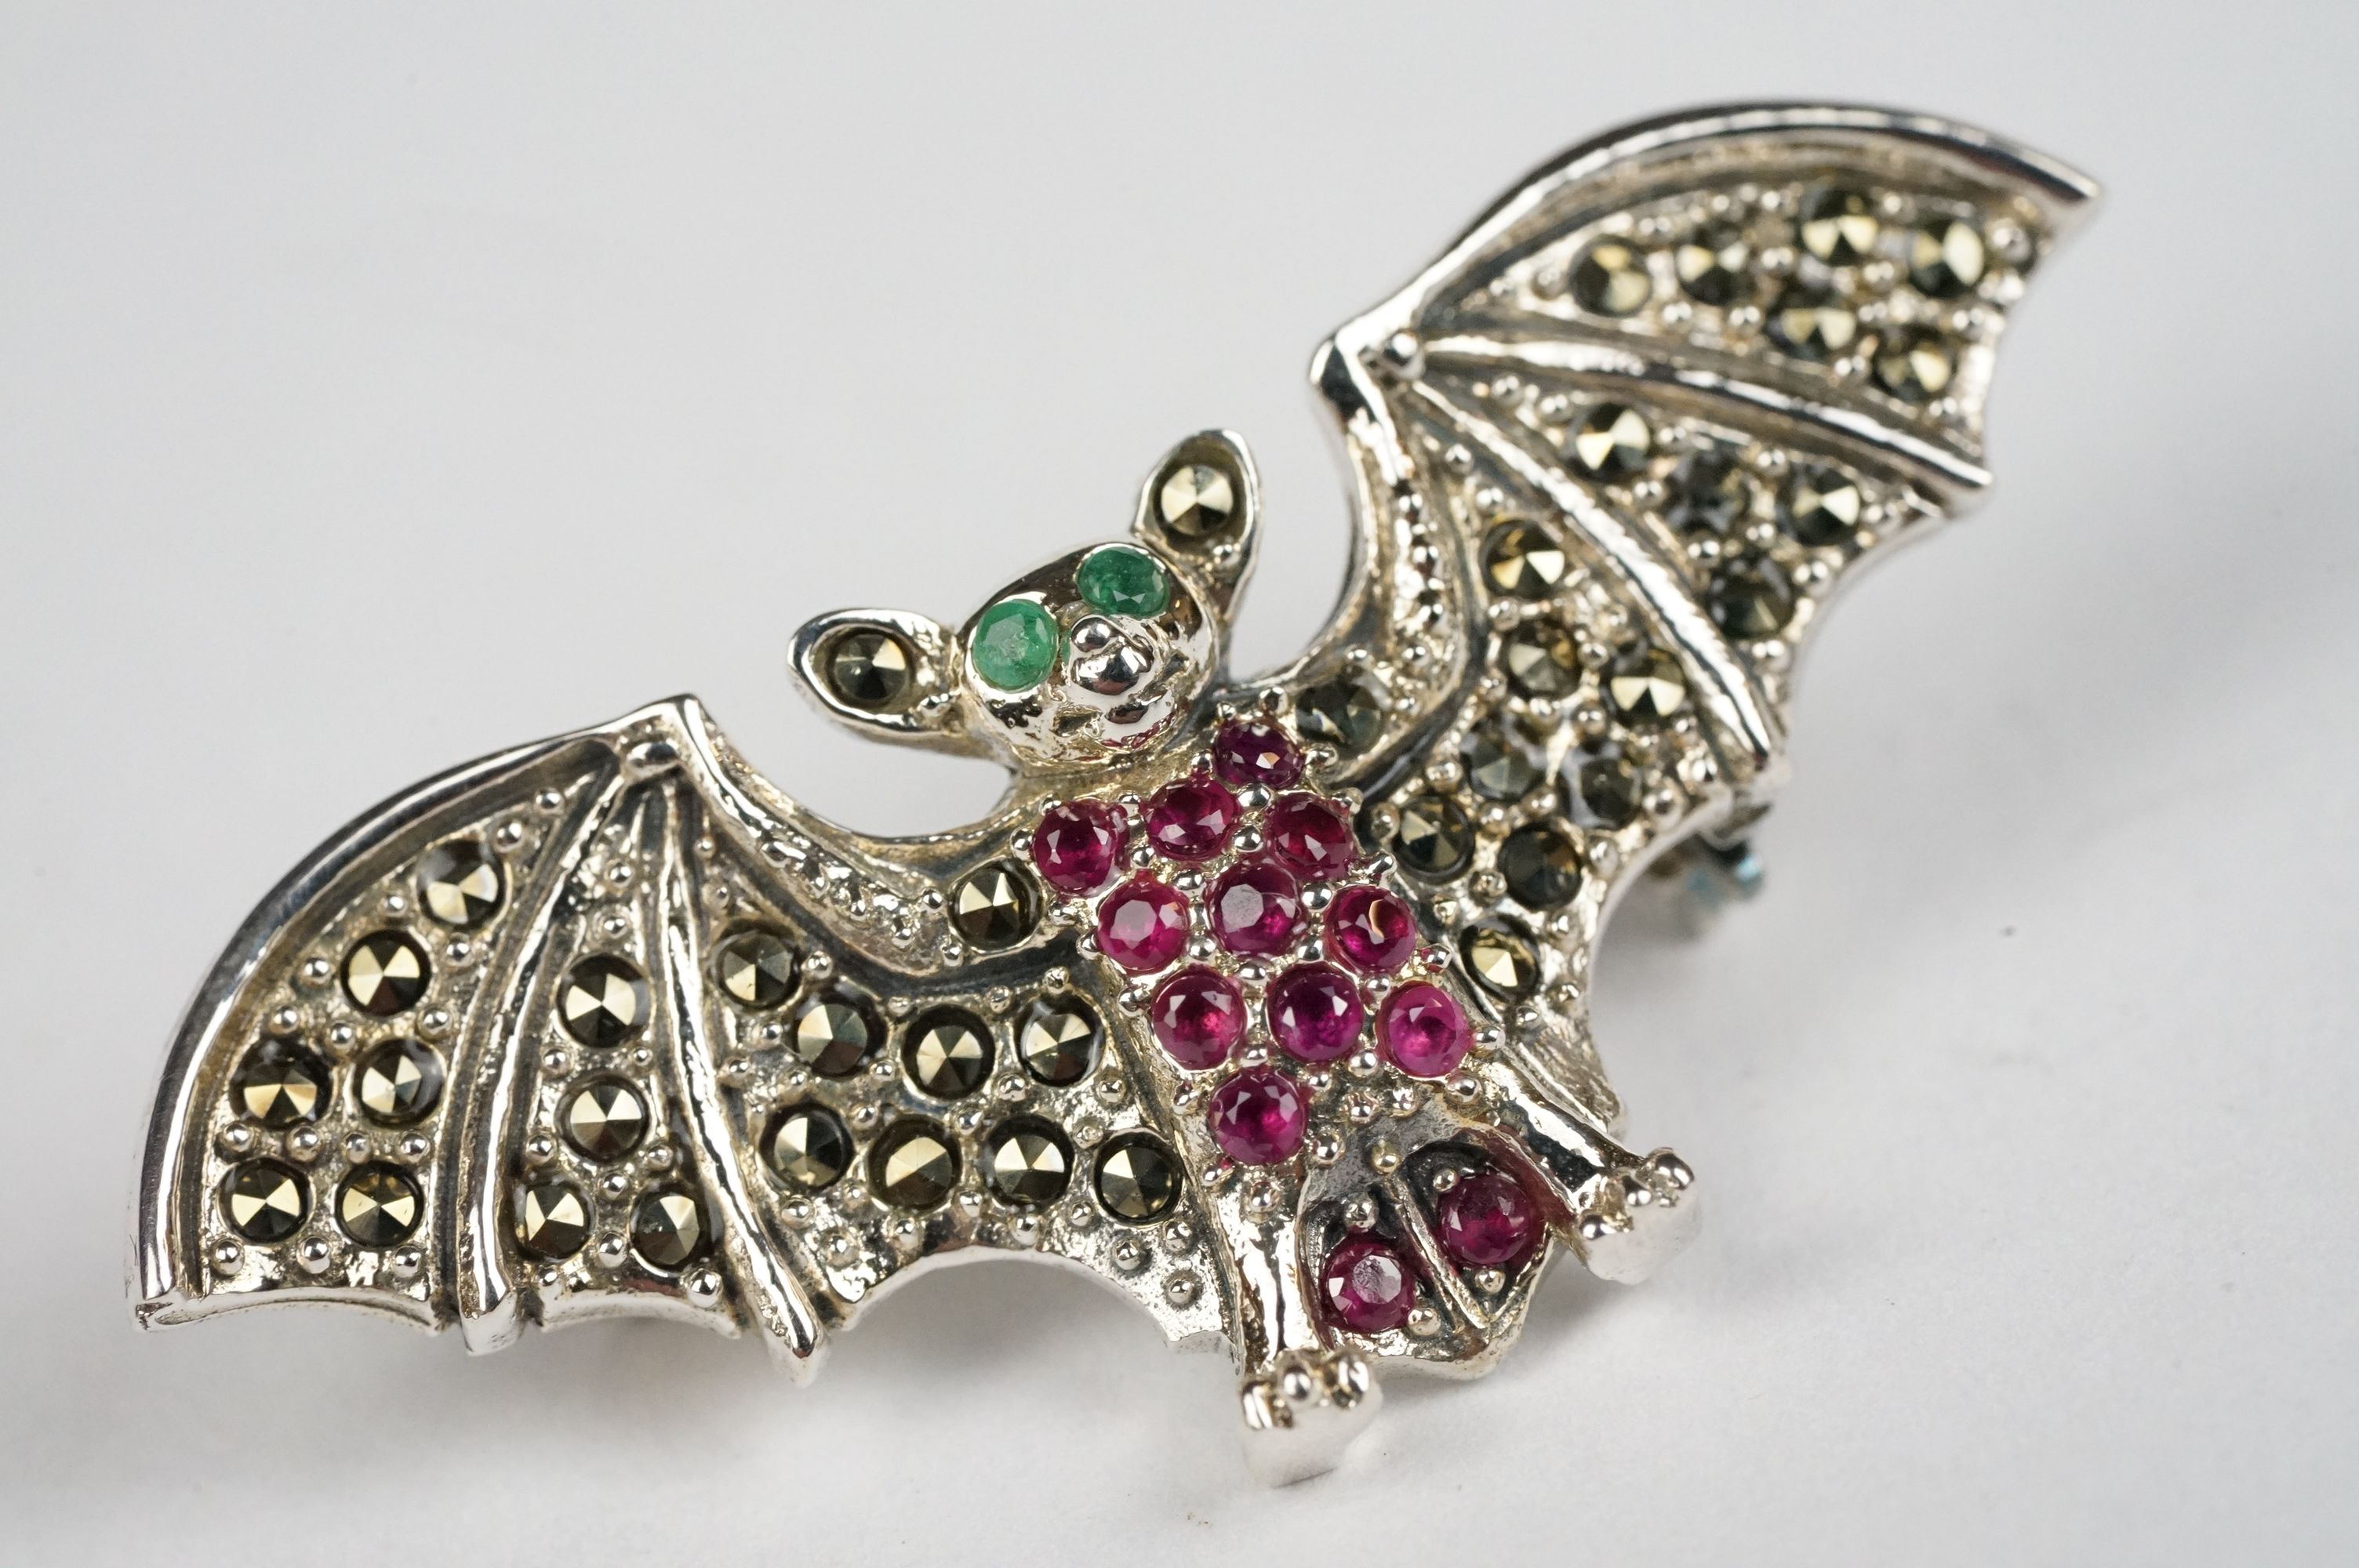 Silver Bat Brooch / Pendant set with gemstones